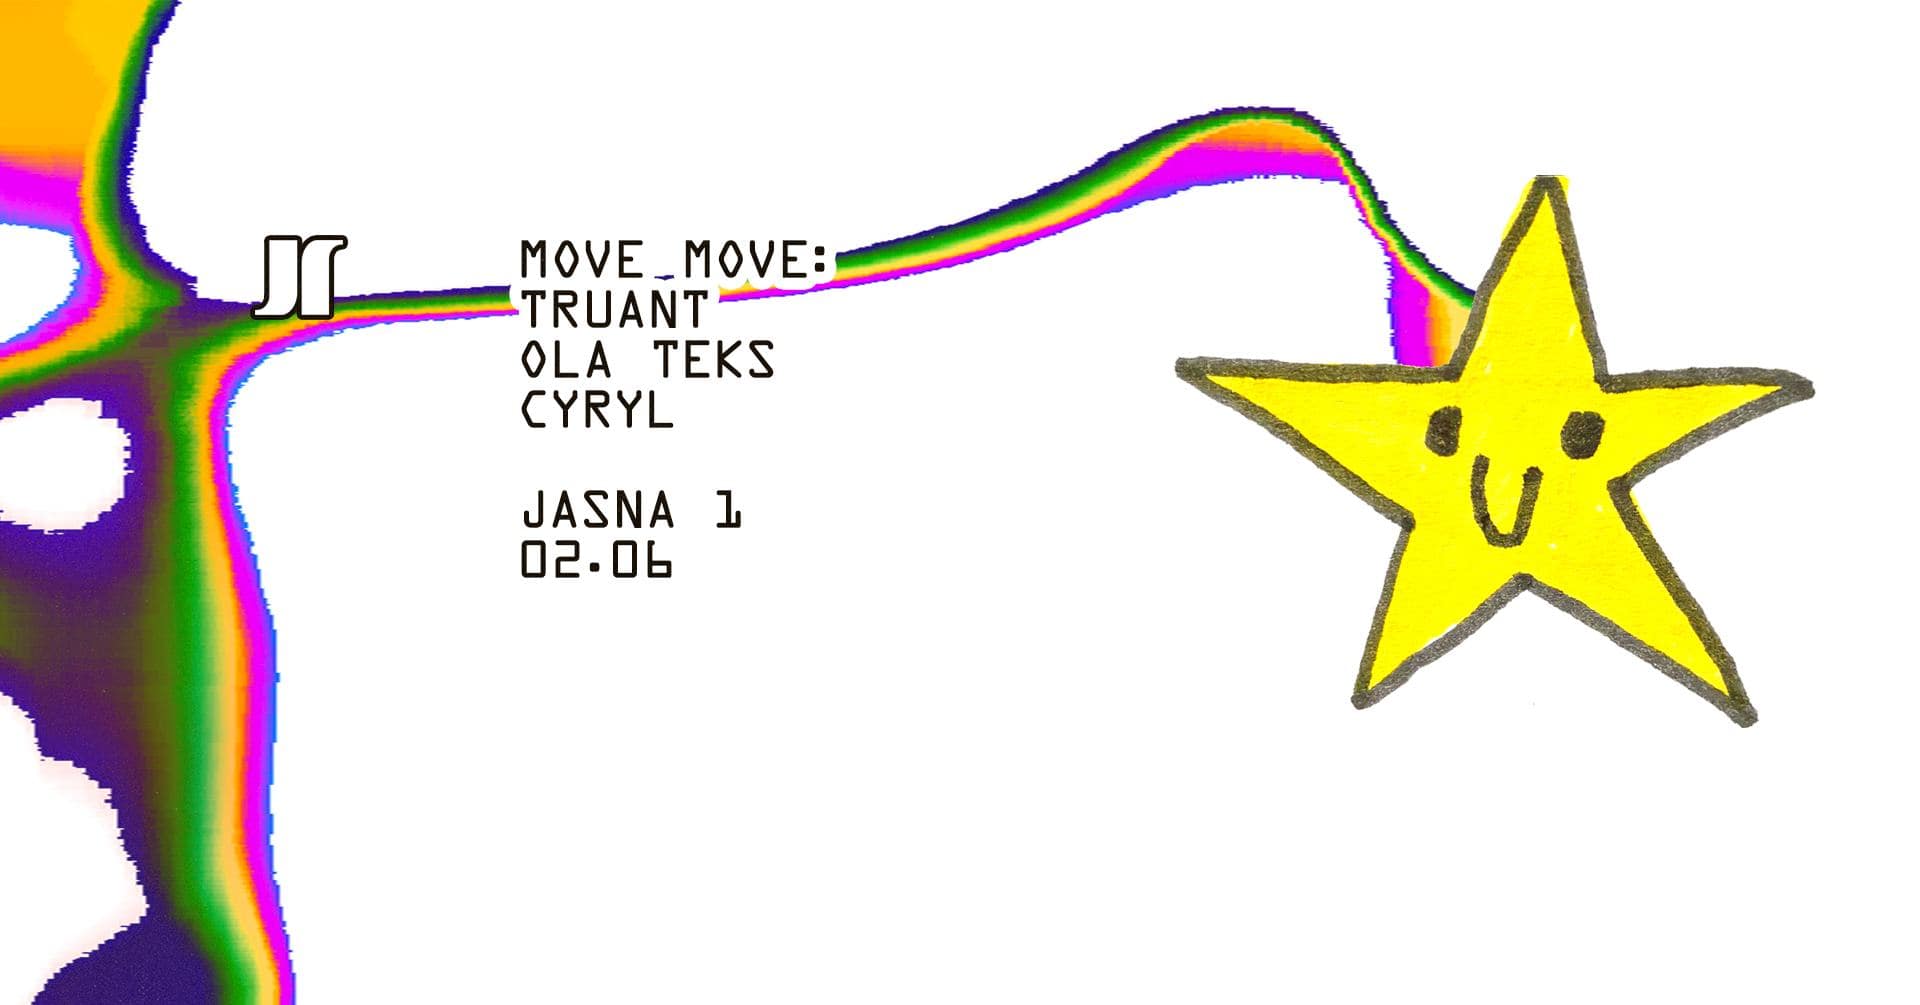 J1 | Move Move w/ Truant, Ola Teks, Cyryl